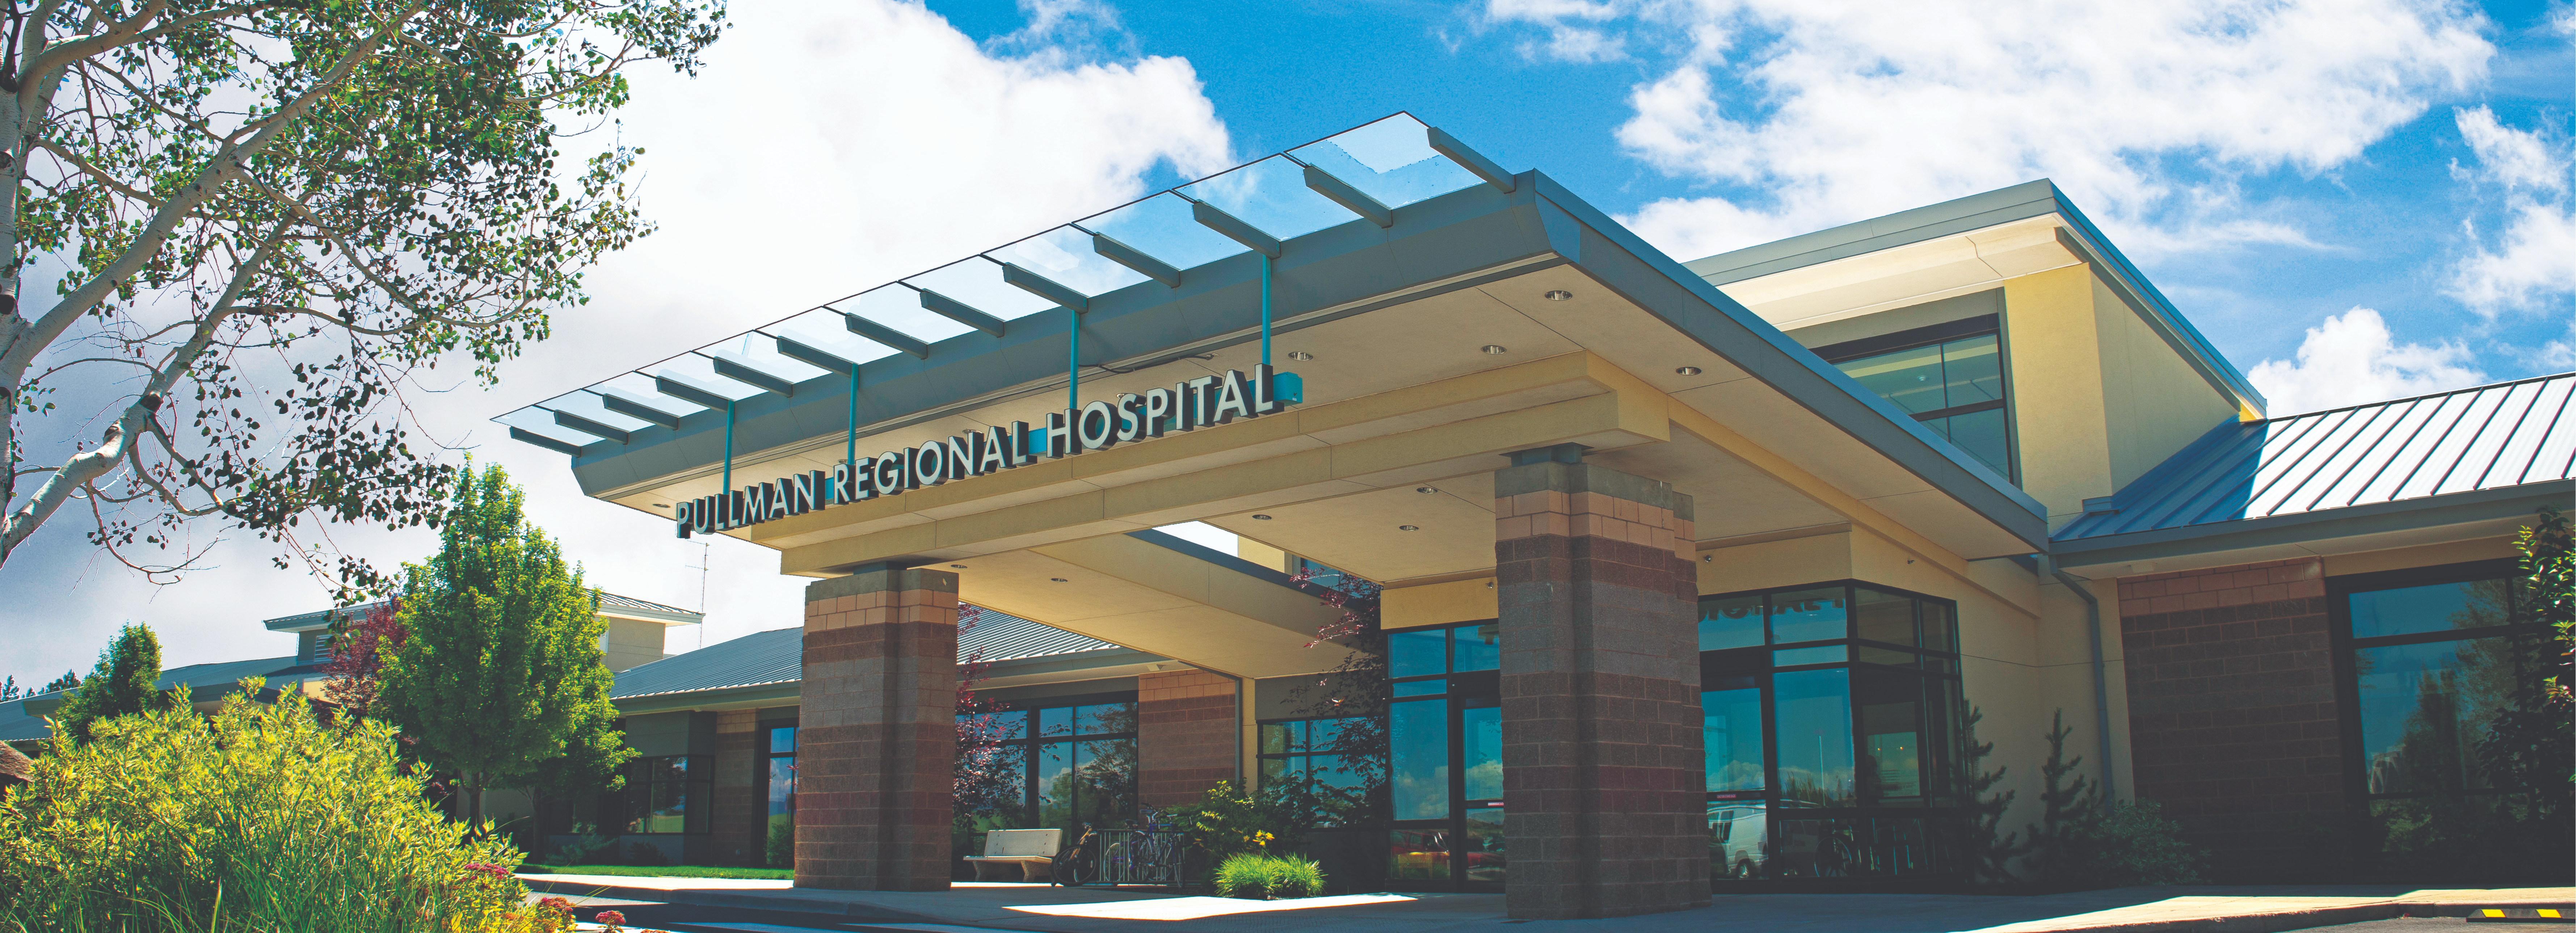 Pullman Regional Hospital Merges Foundation & Community Relations